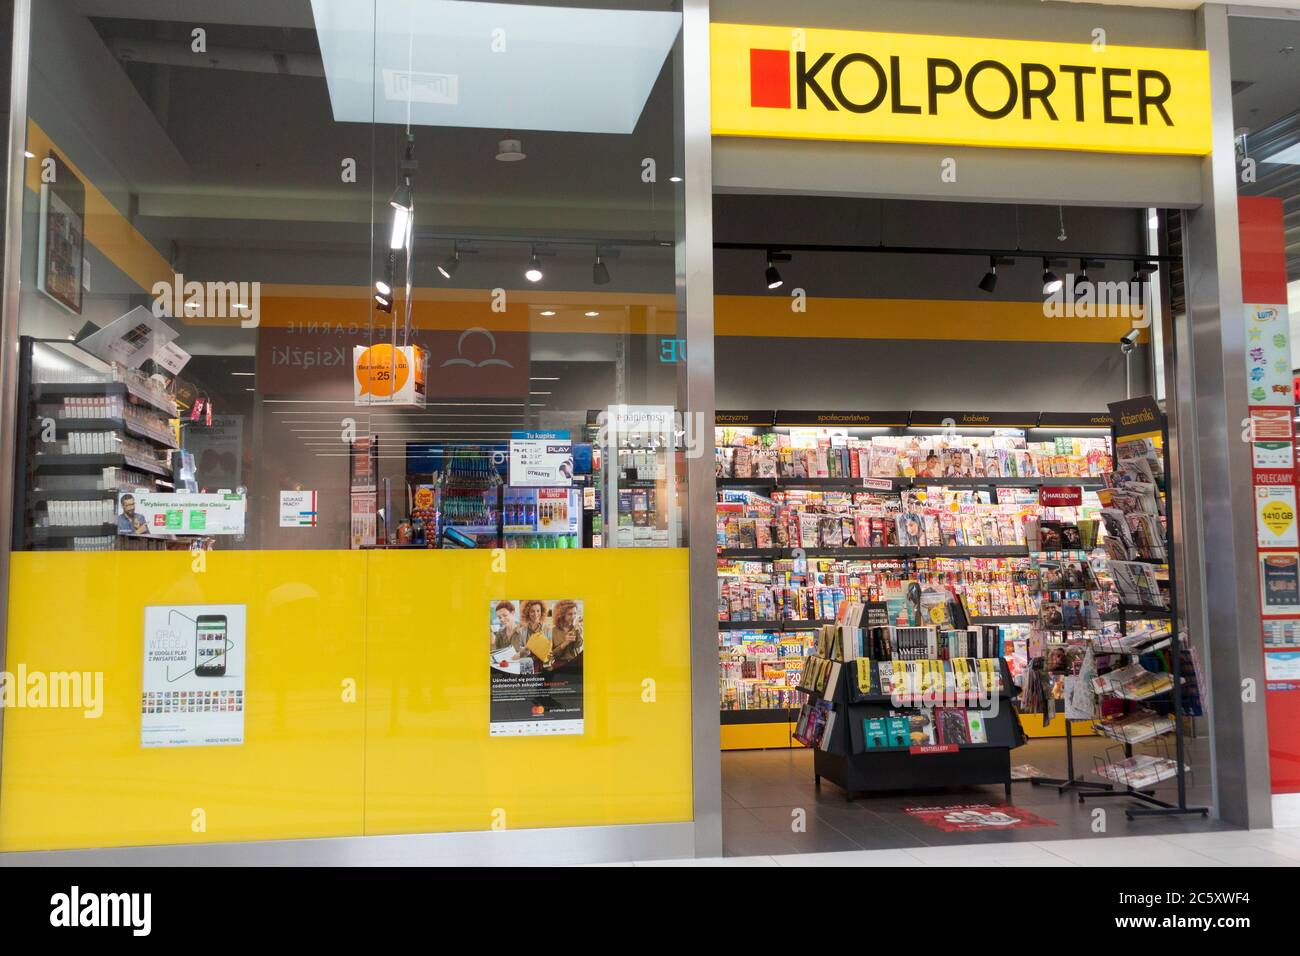 Kolporter a Polish magazine and convenience store in the Galleria Tomaszow upscale shopping mall. Tomaszow Mazowiecki Central Poland Stock Photo